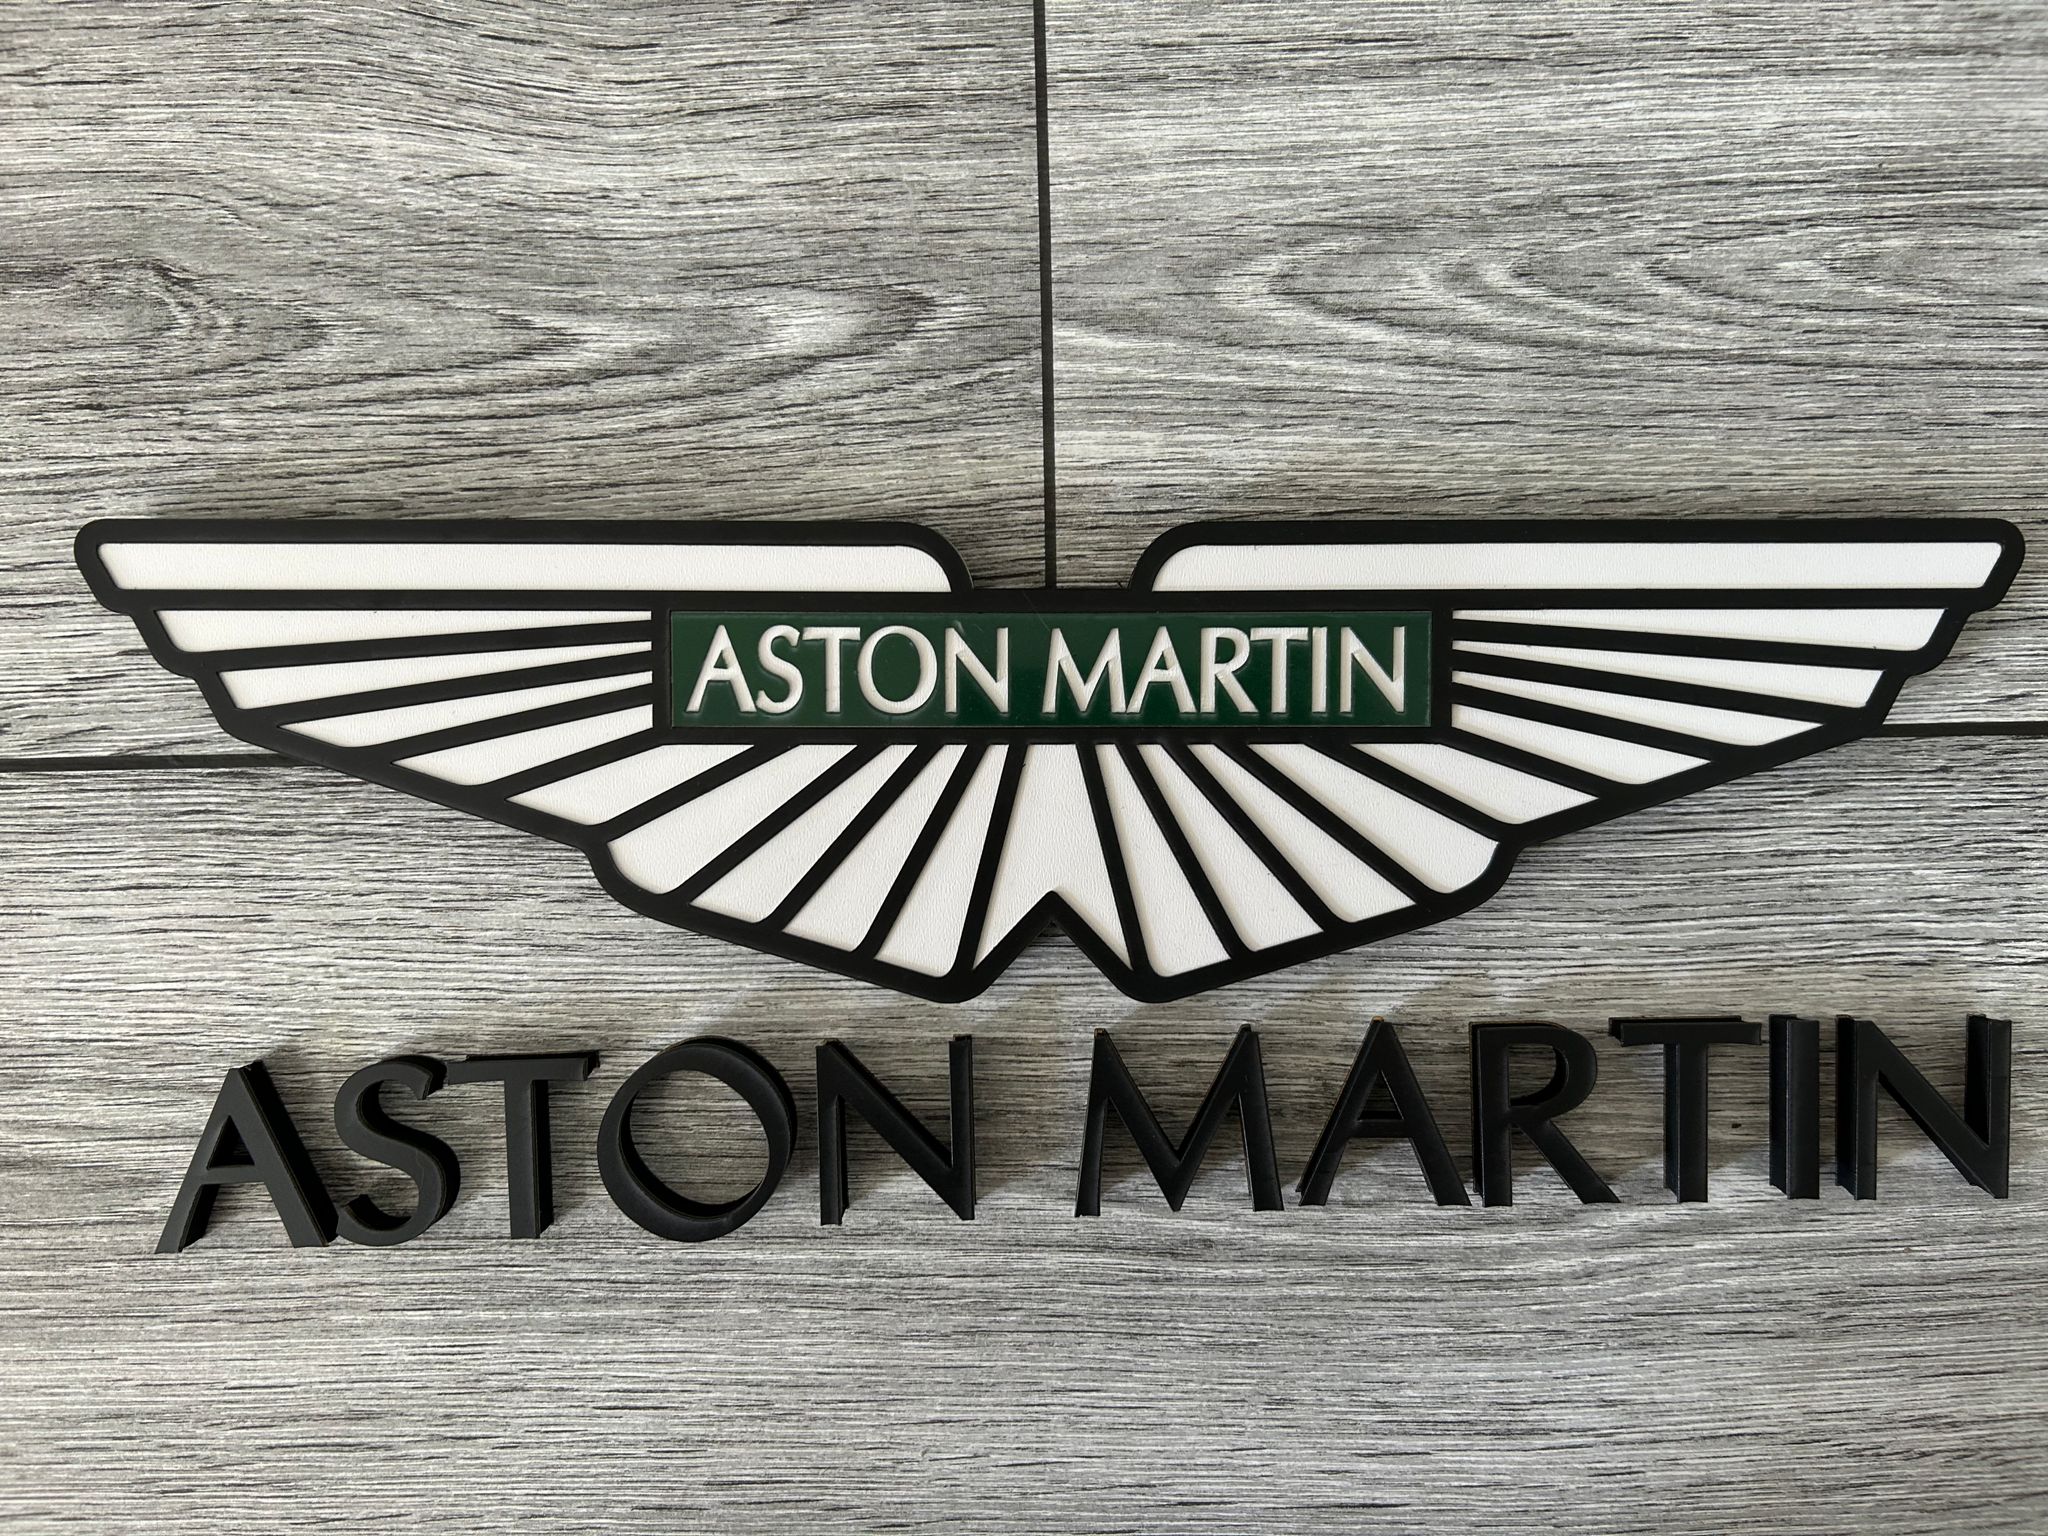 Aston Martin Wall Decor Aston Martin Wood Sign Aston Martin Motor Vehicle Wall Plaque Aston Martin Wall Art